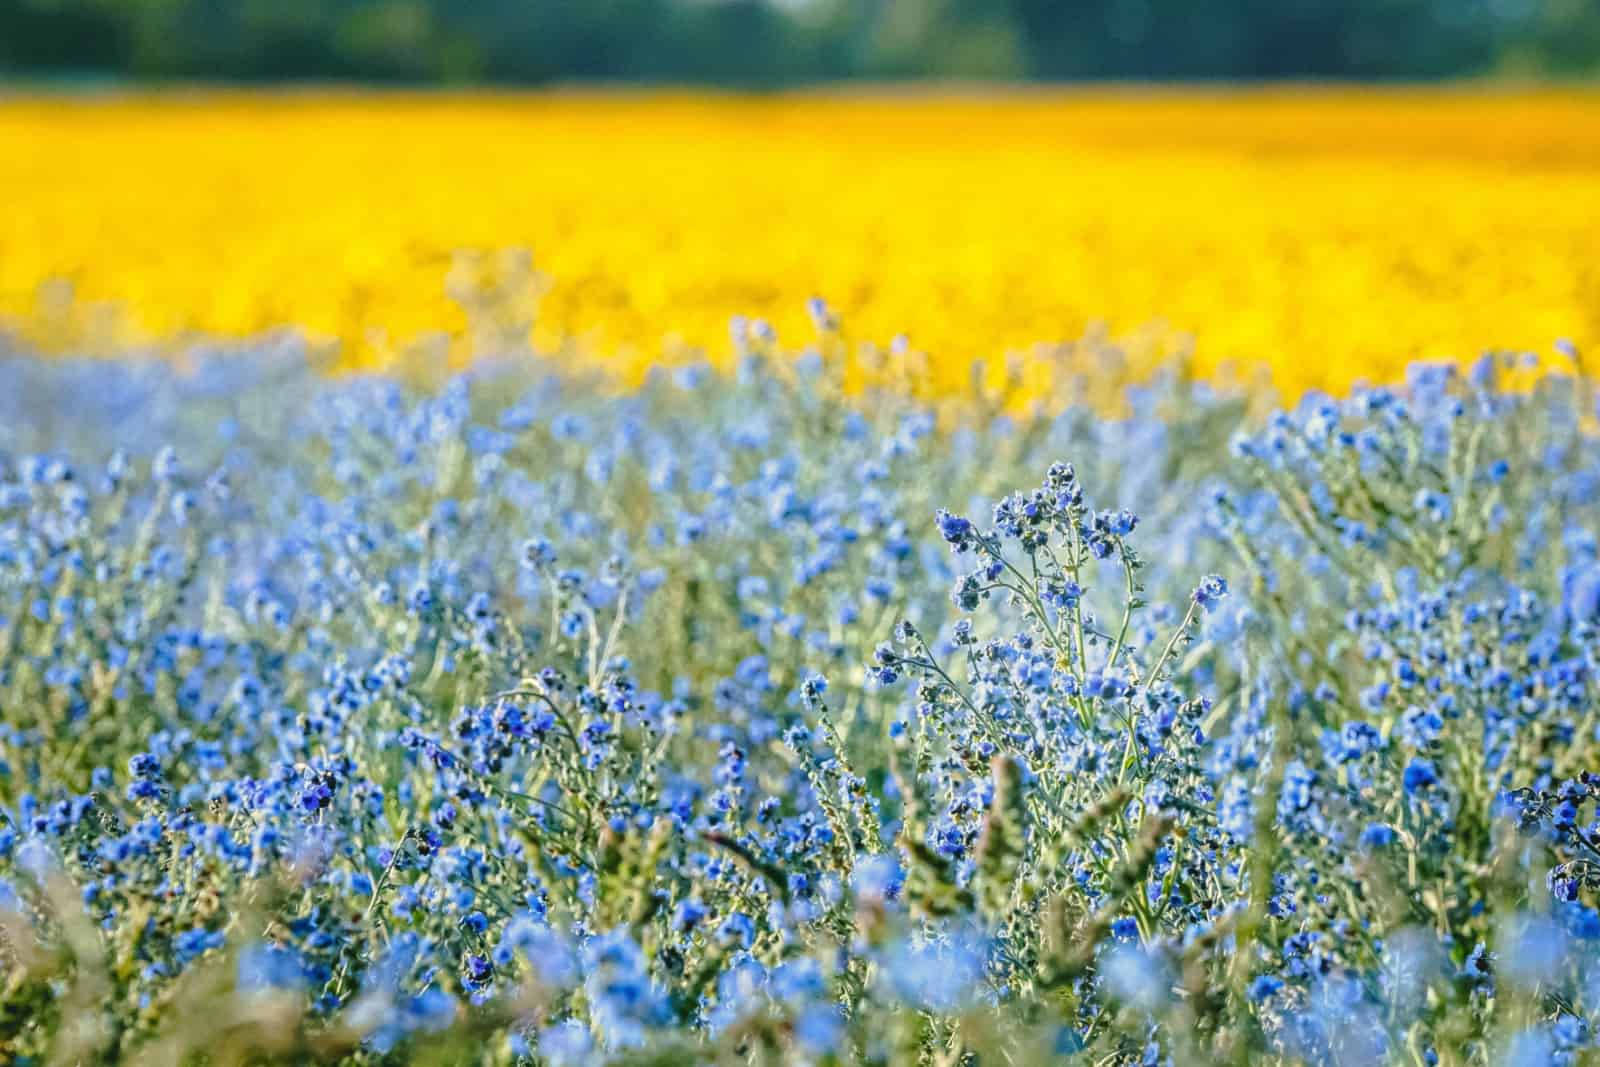 Beautiful little blue flowering flax flowers closeup waving in the wind